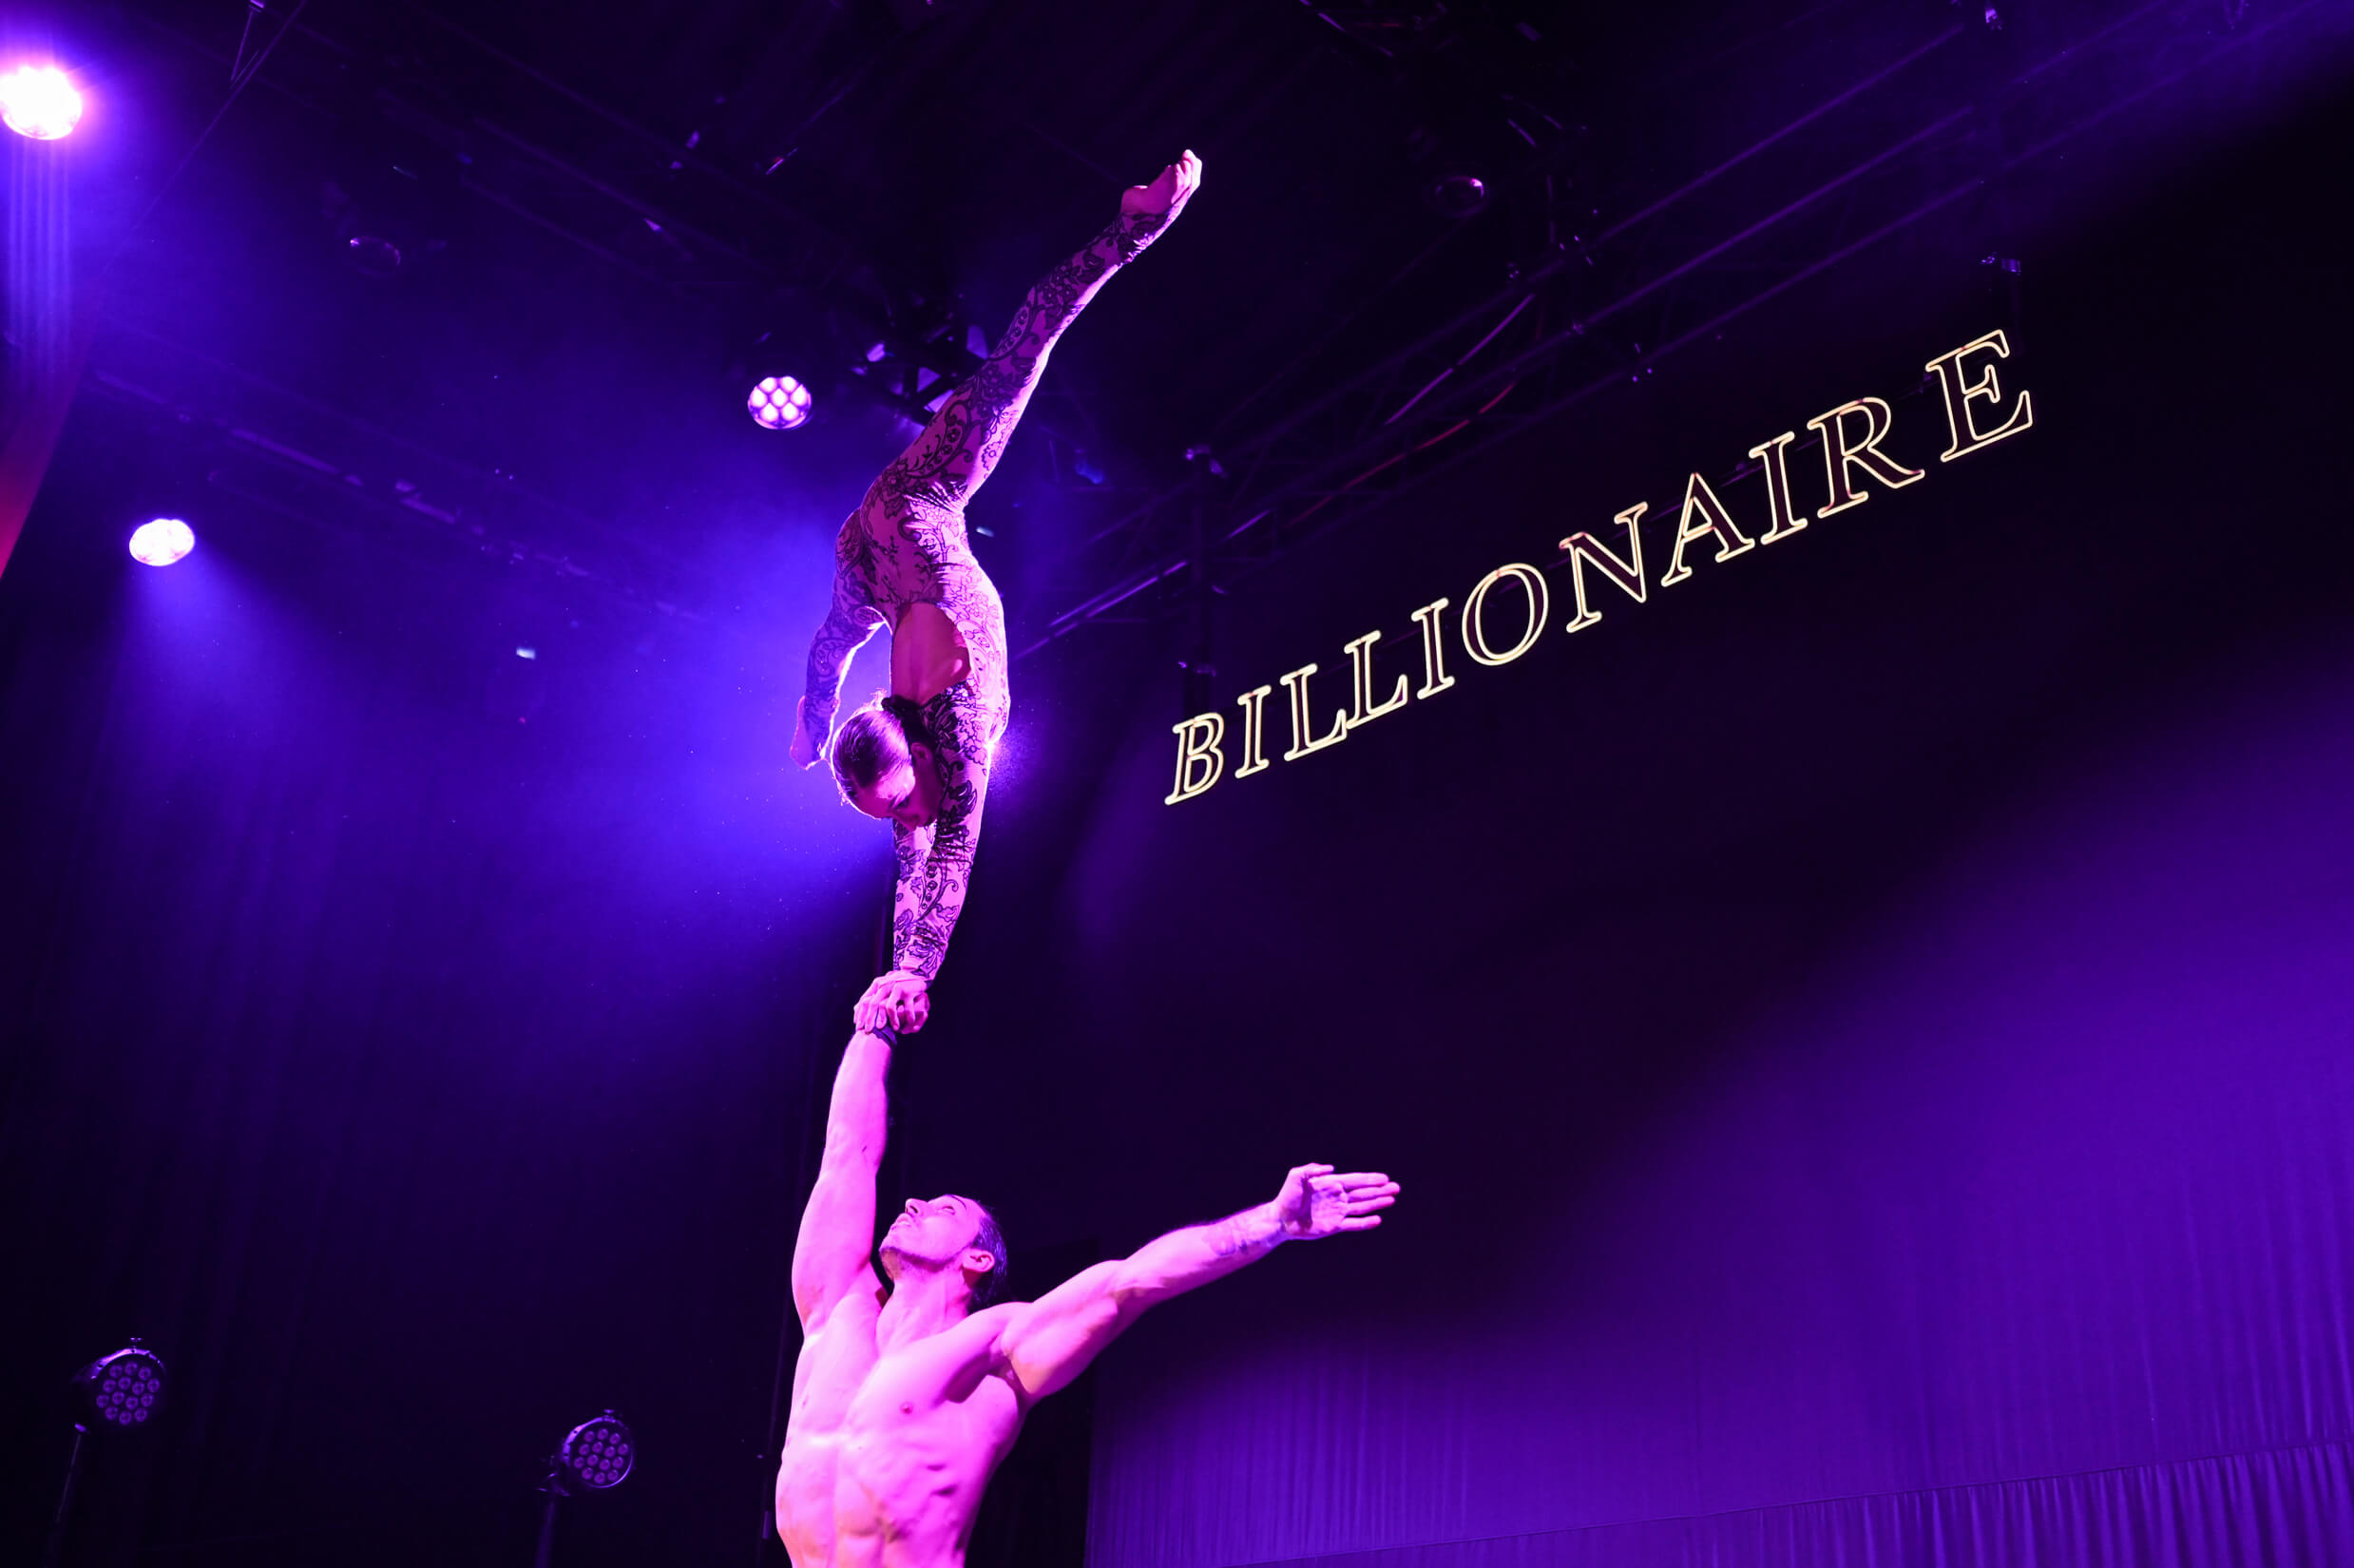 Billionaire performers